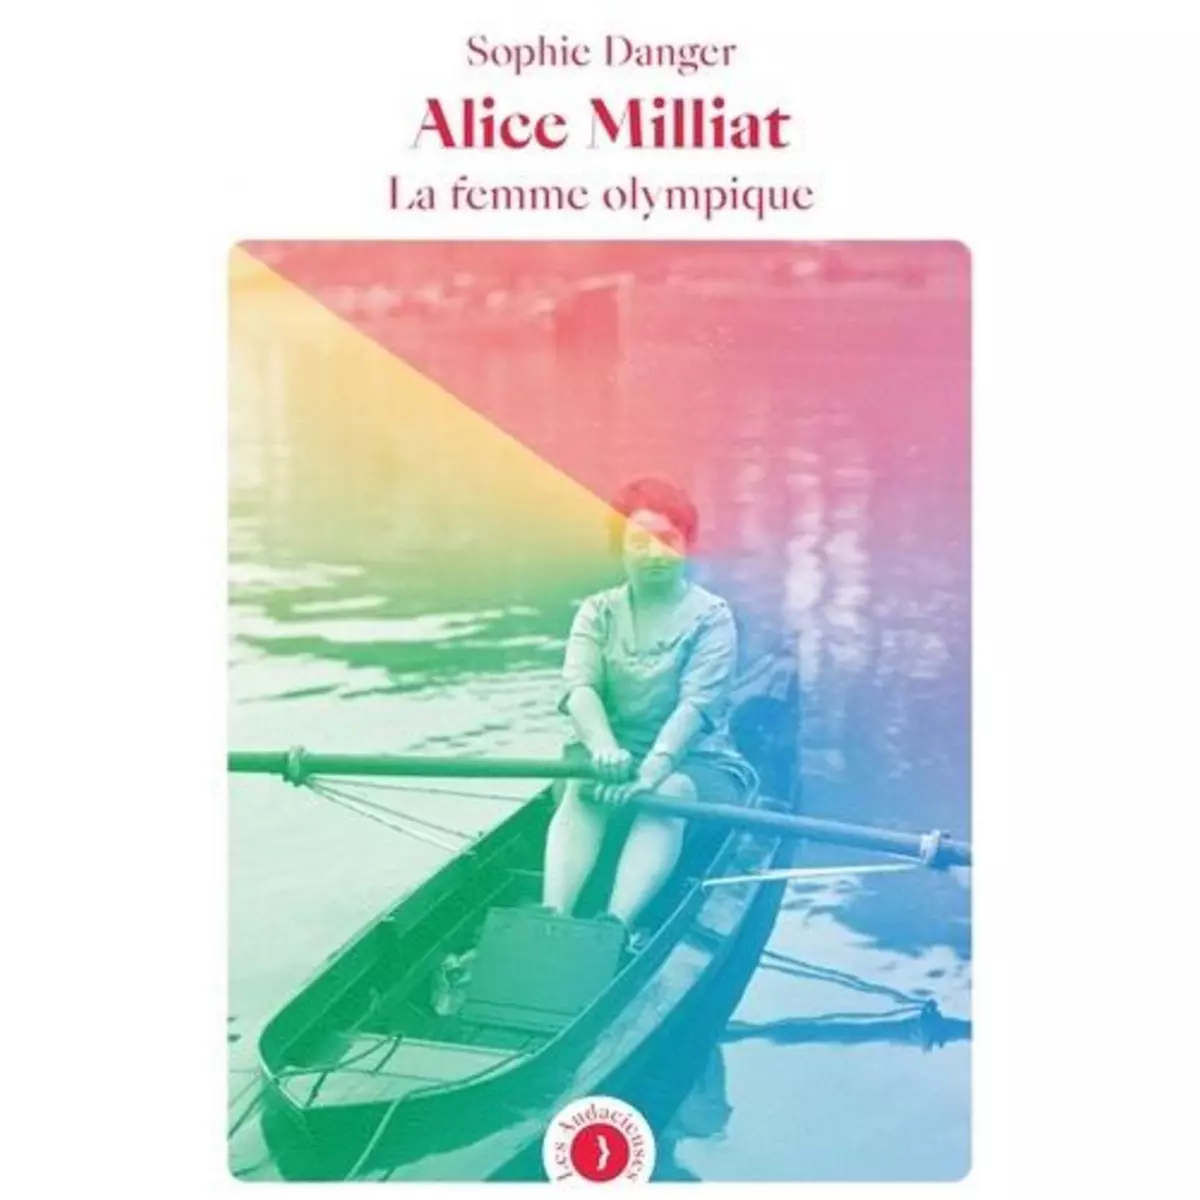  ALICE MILLIAT, LA FEMME OLYMPIQUE, Danger Sophie